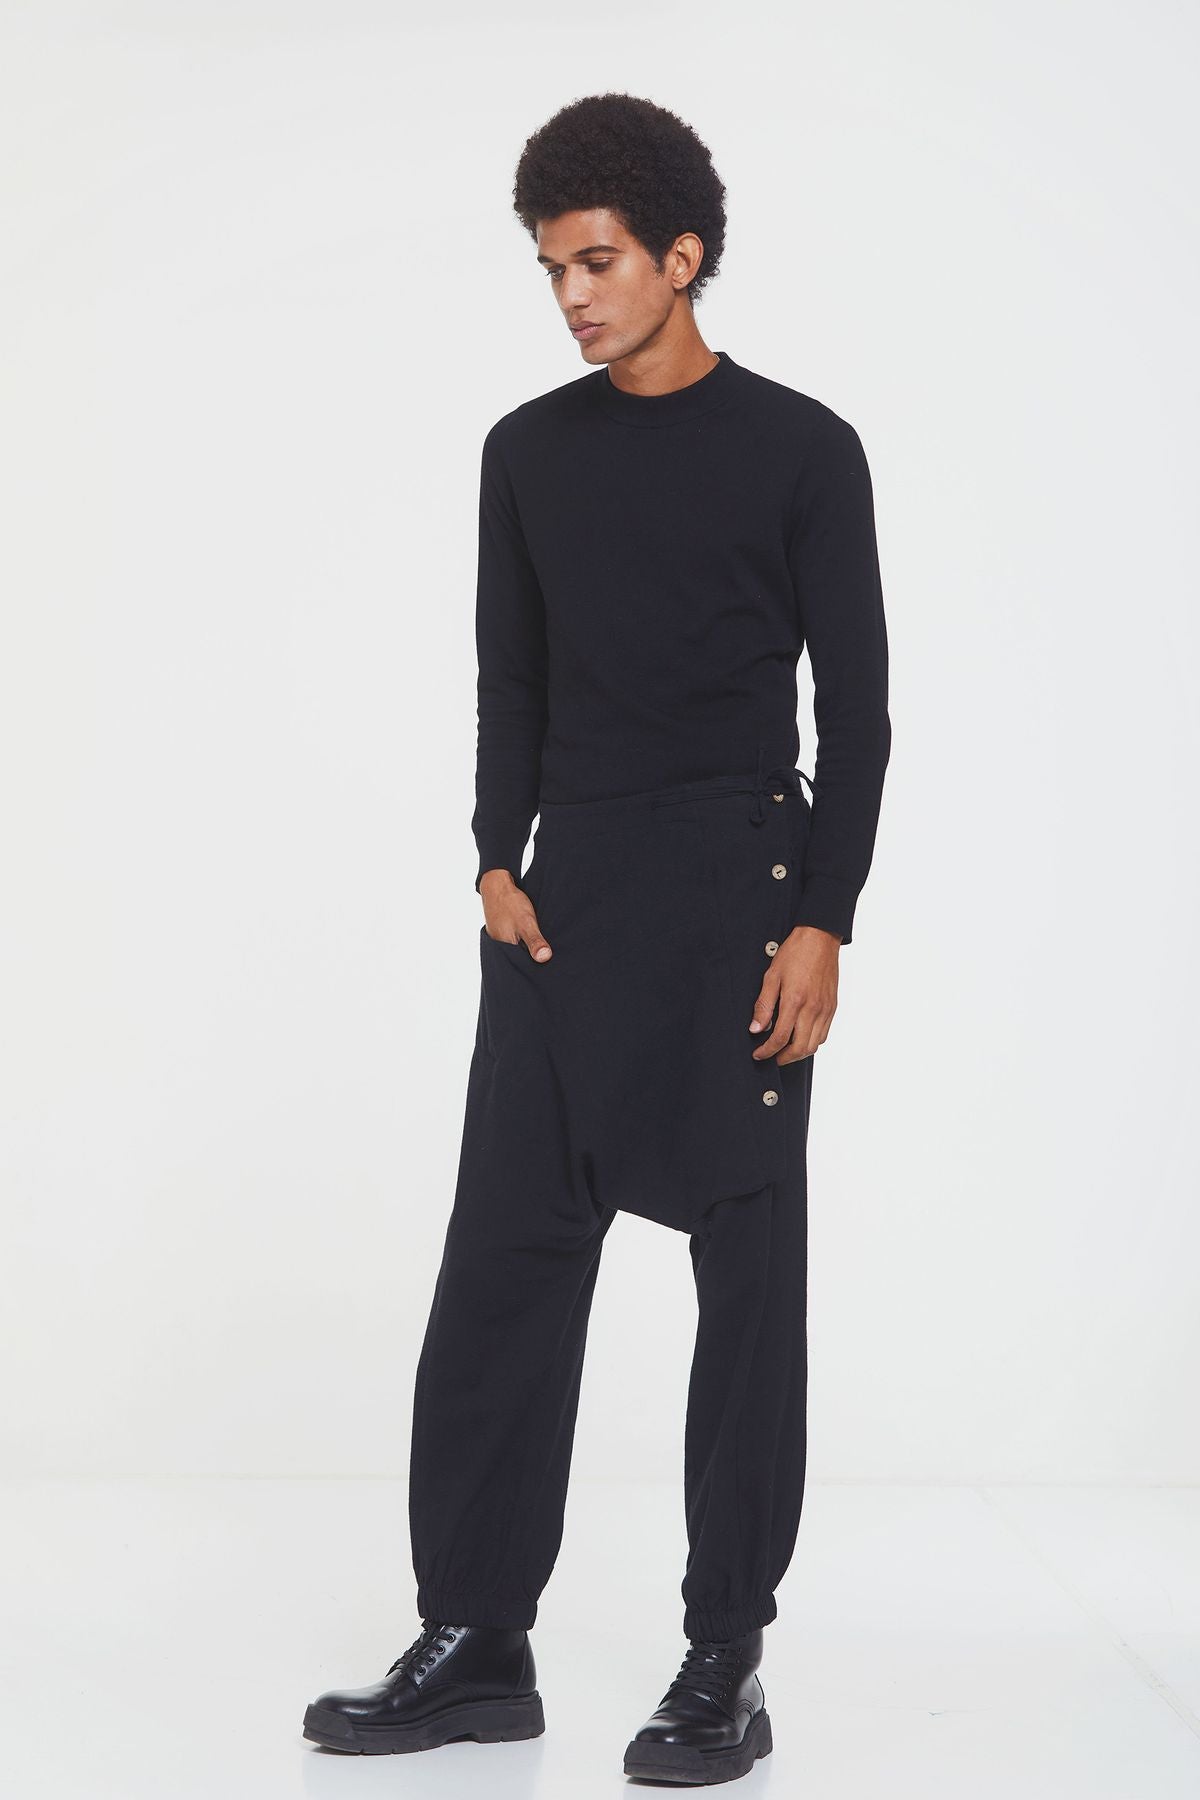 Elastic Cuff Men's Winter Harem Pants with Pocket Black